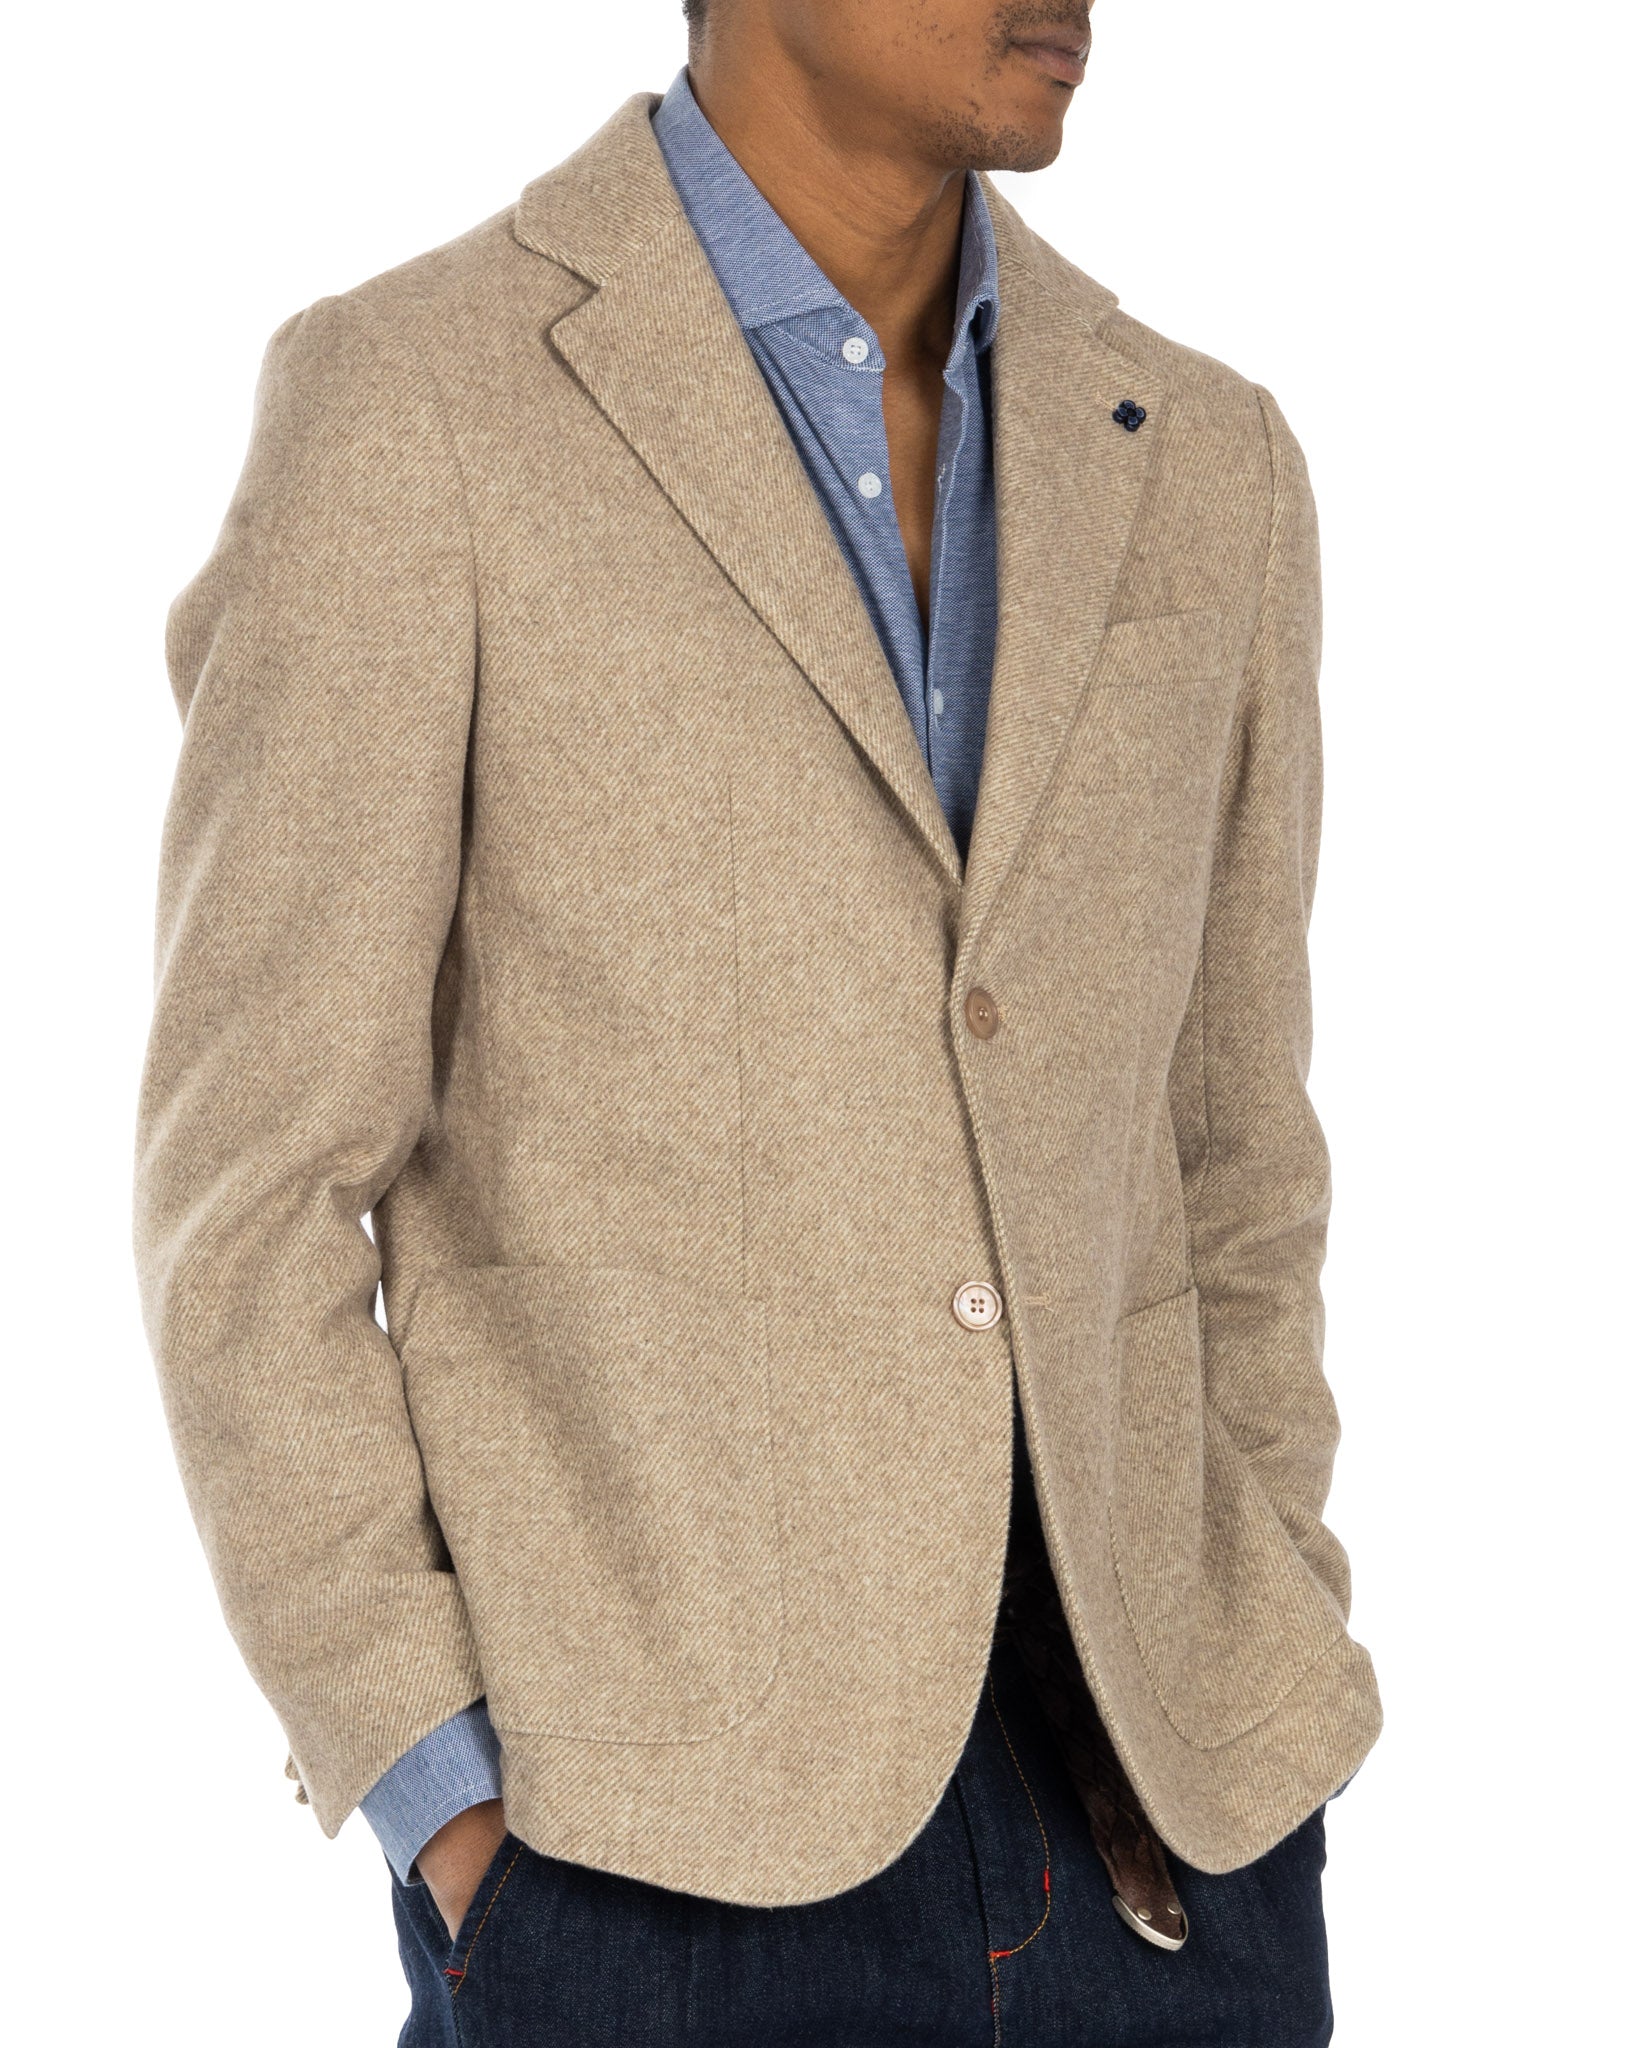 Belluno - beige herringbone weave jacket